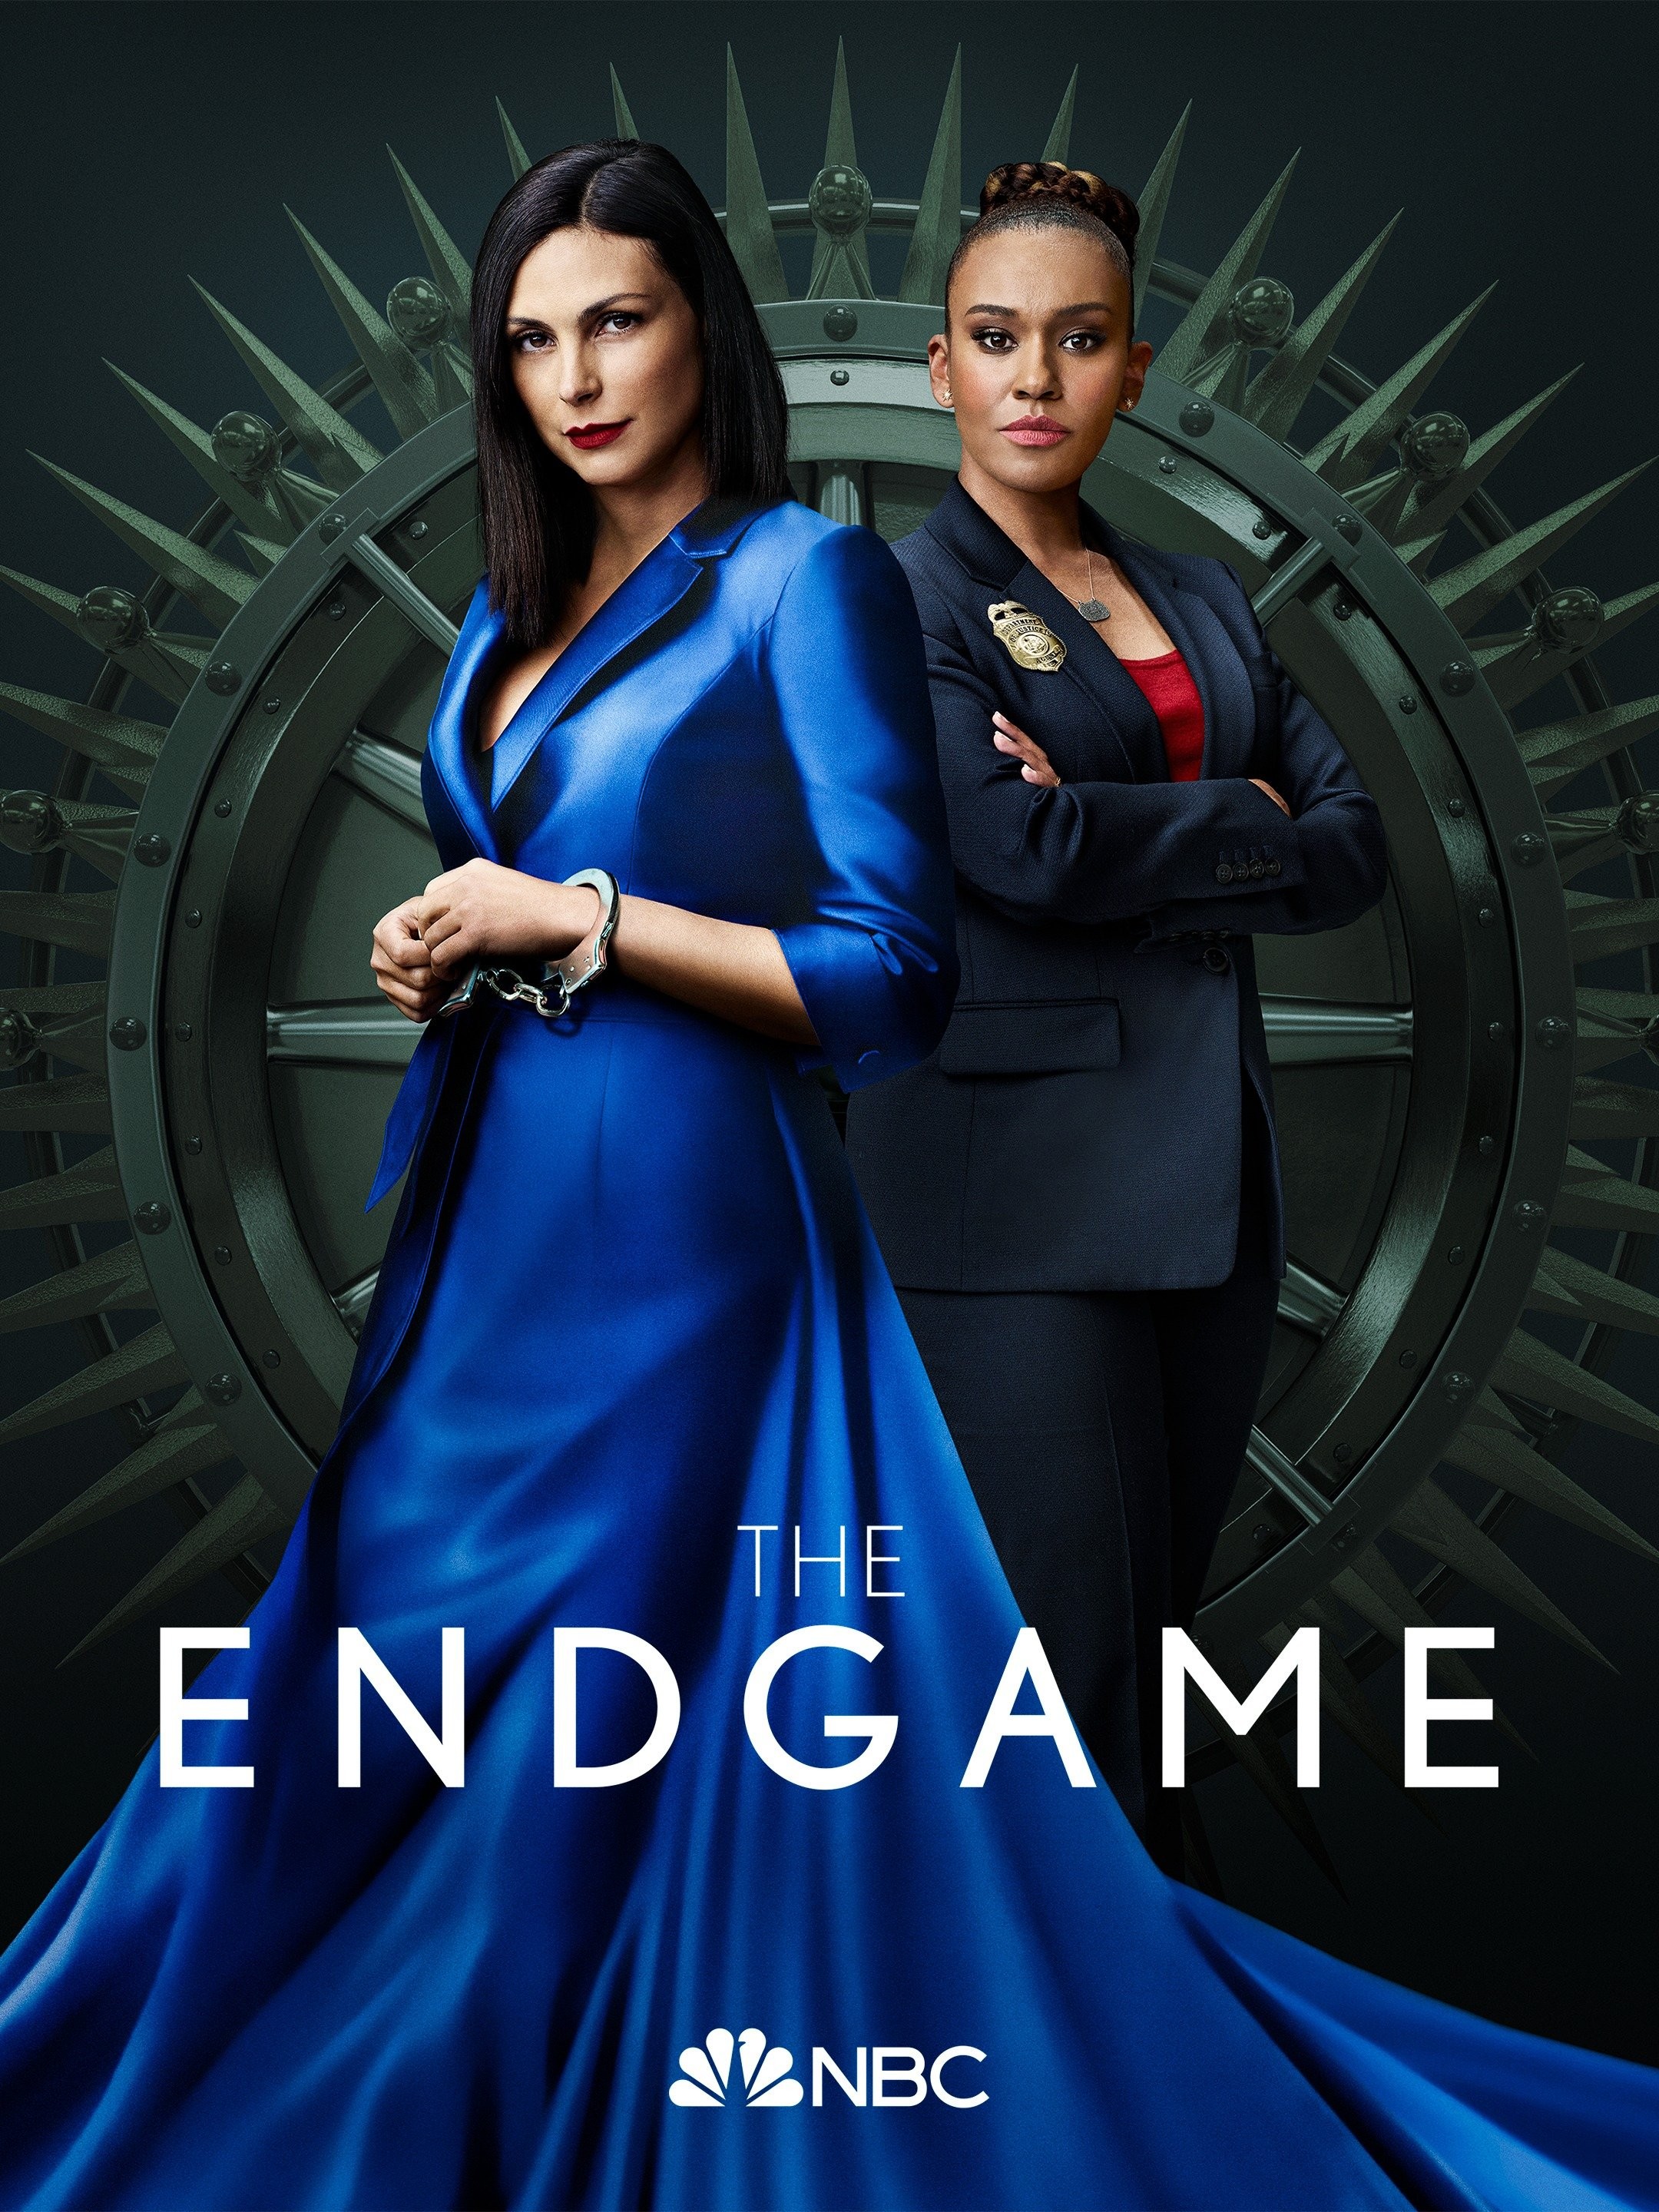 The Endgame Season 2 Expected Release Date - NBC, Episode 1